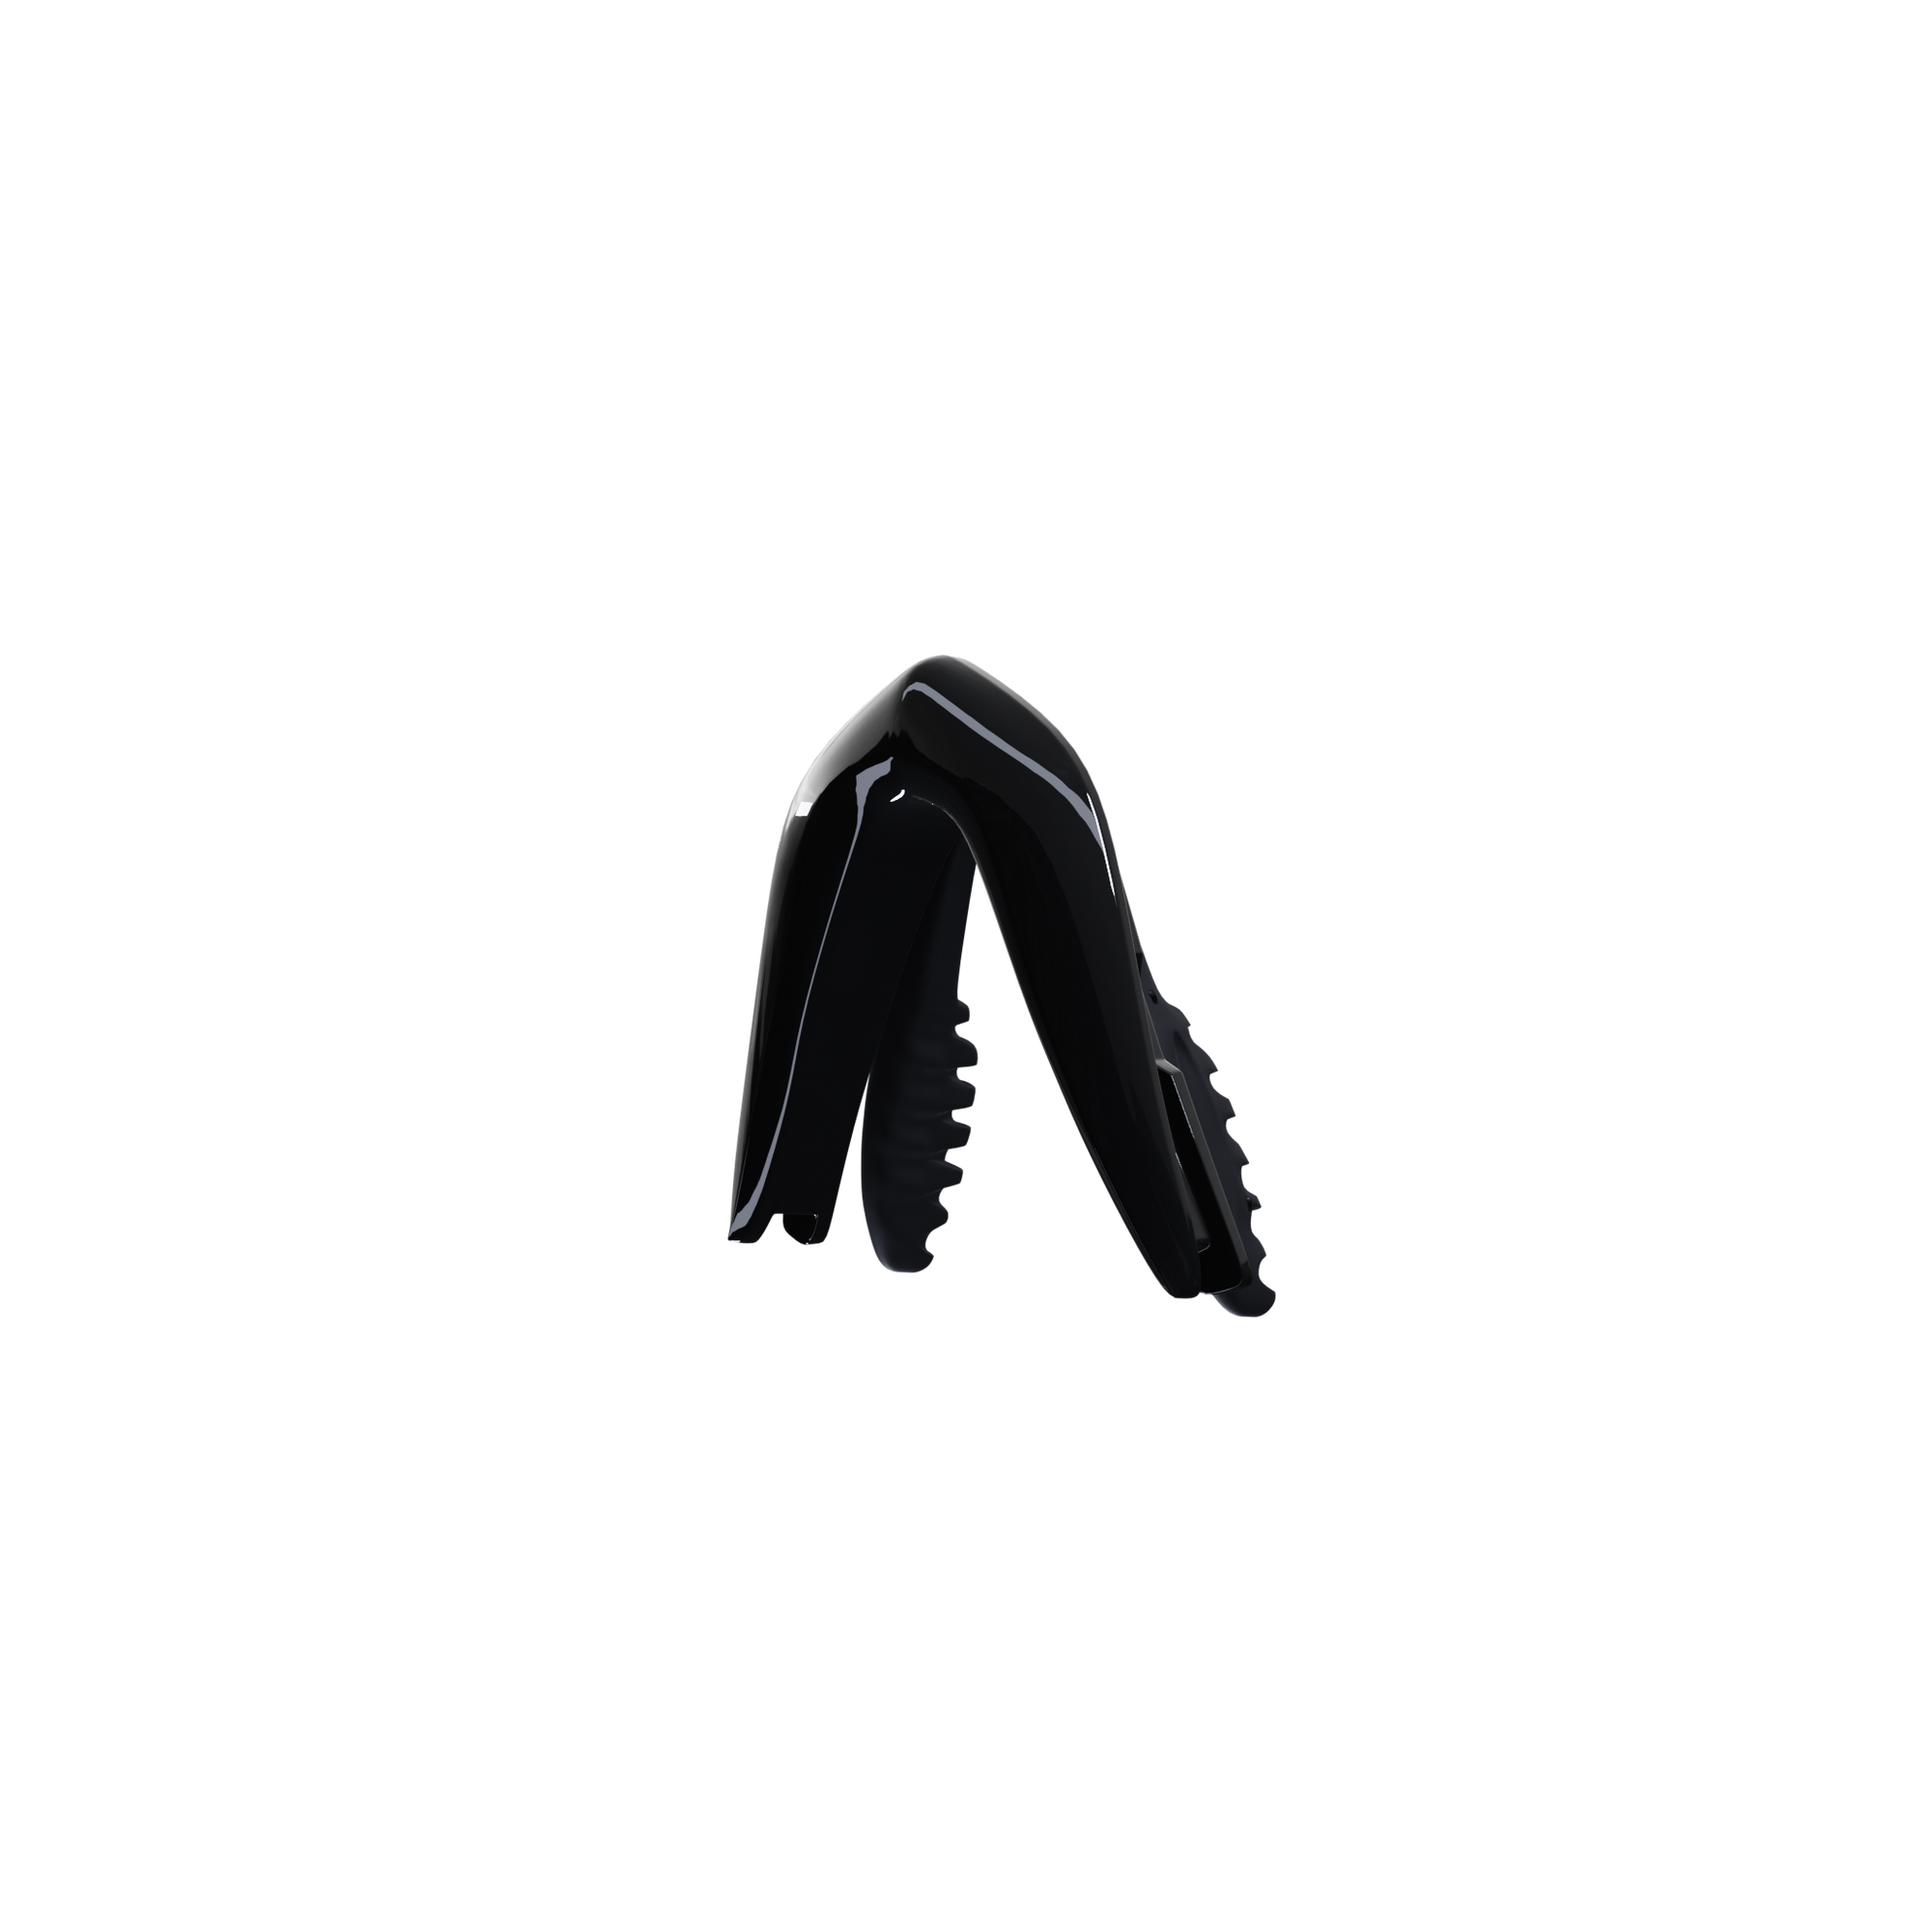 Customisable Hypersonic cycling sunglasses black nose piece | VeloChampion